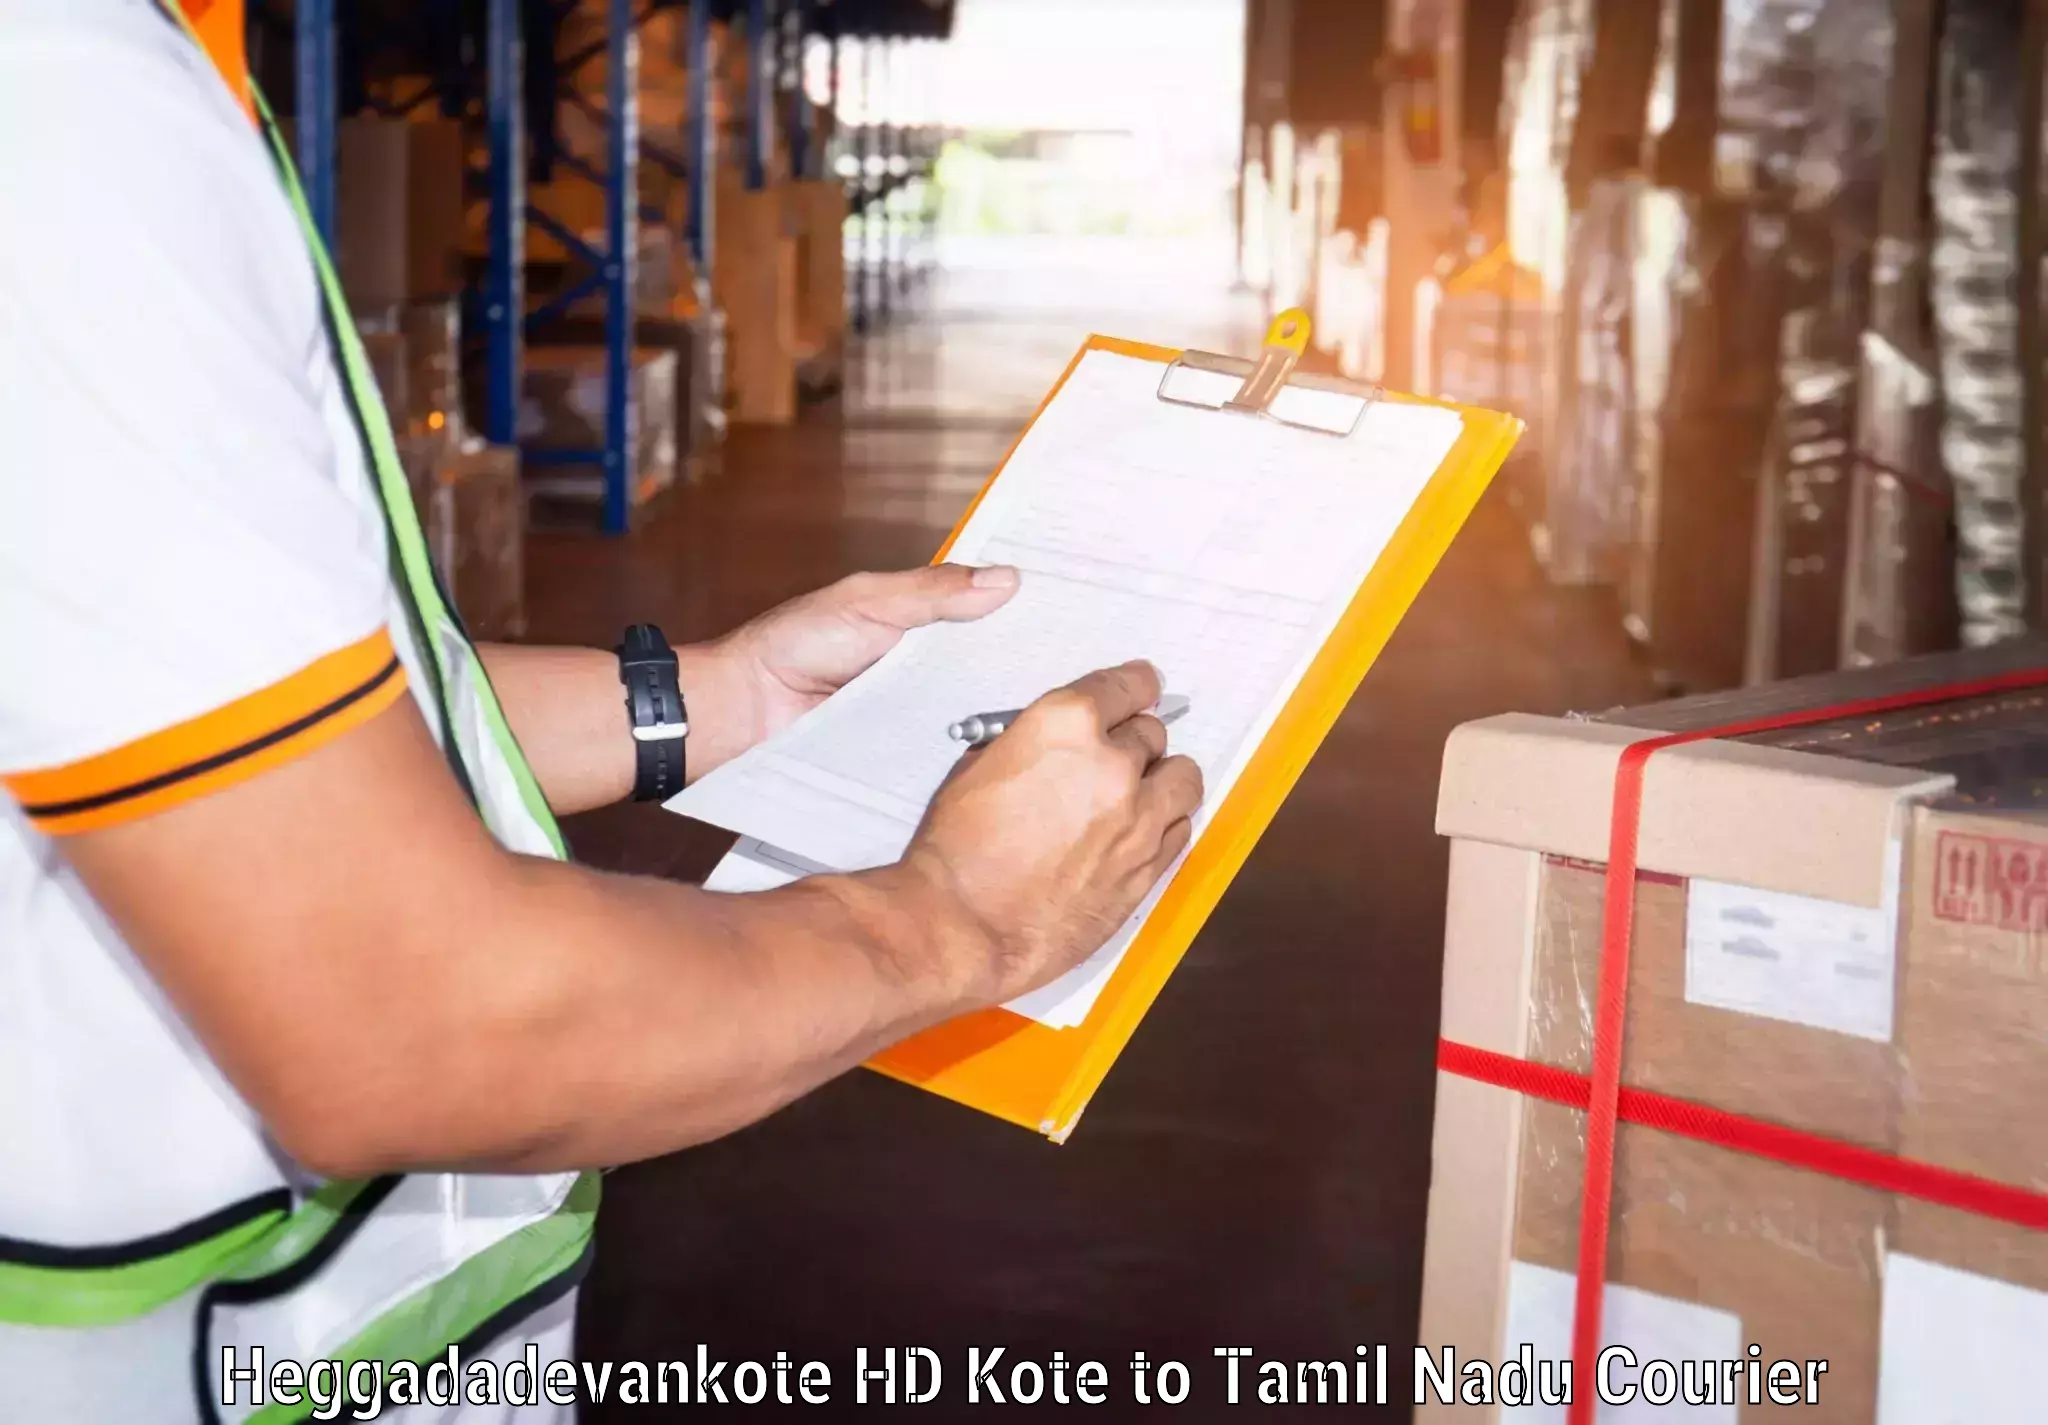 Professional courier handling Heggadadevankote HD Kote to Kanchipuram